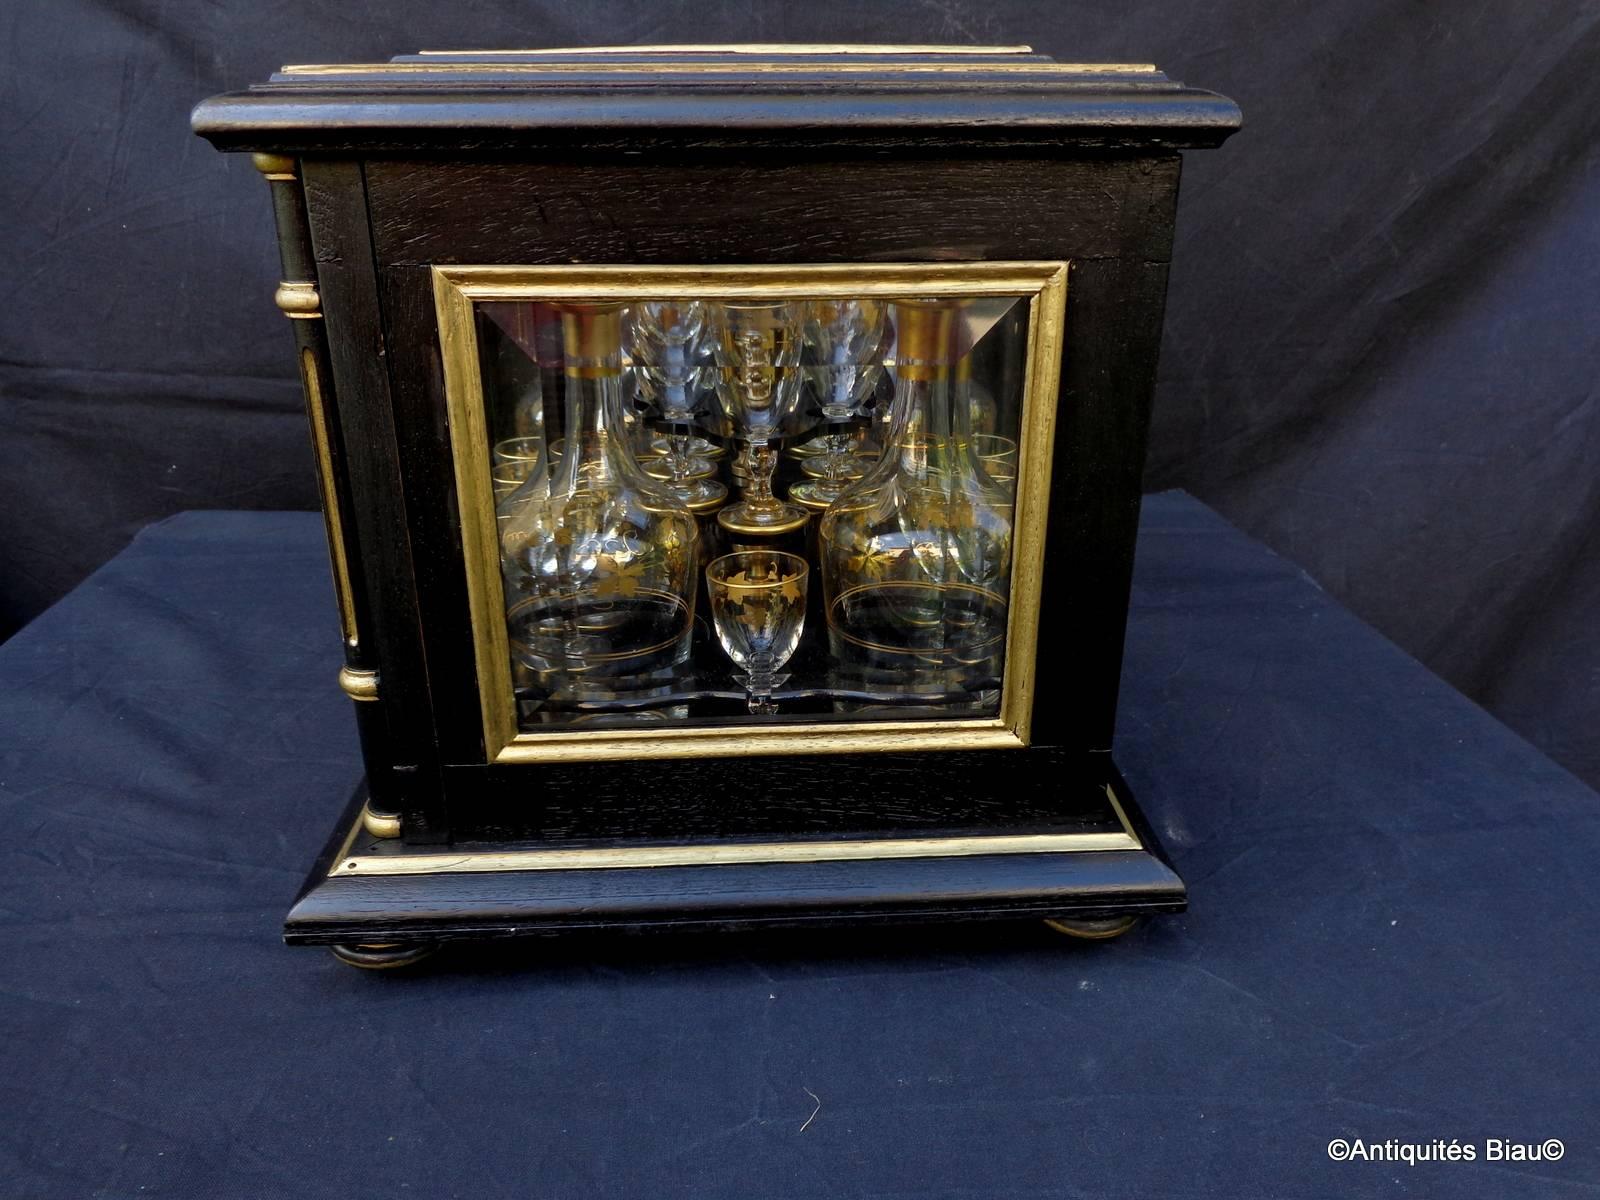 Tantalus Liquor Box with Glasses in Black and Gold, 19th Century, Napoleon III 5